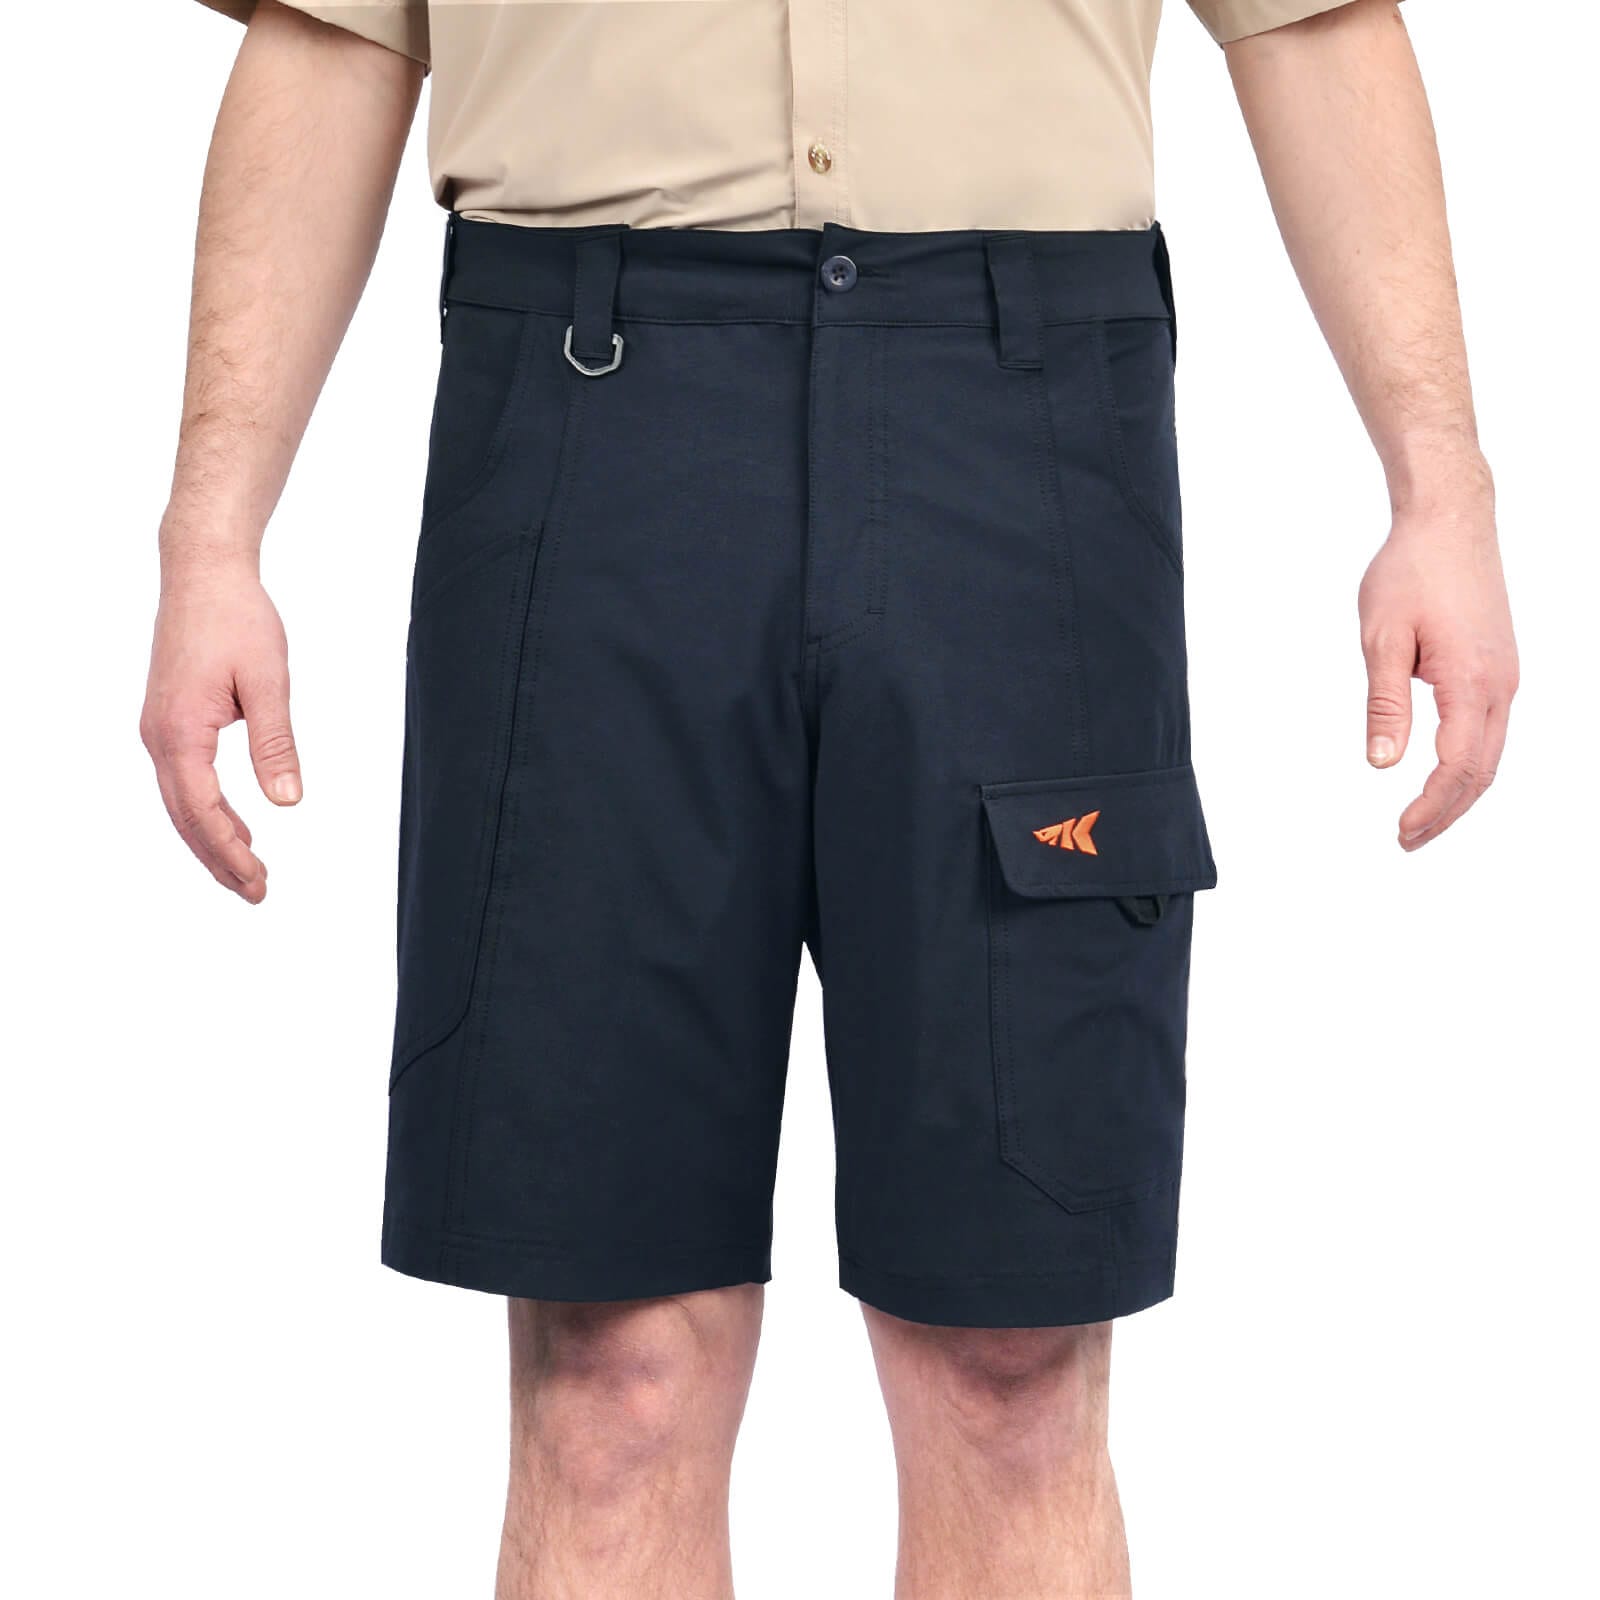 Men's Shorts Below The Knee Lightweight Walking Seven Point Belt Pocket  Cargo Exercise Fishing Cargo Shorts for Men Multi-color